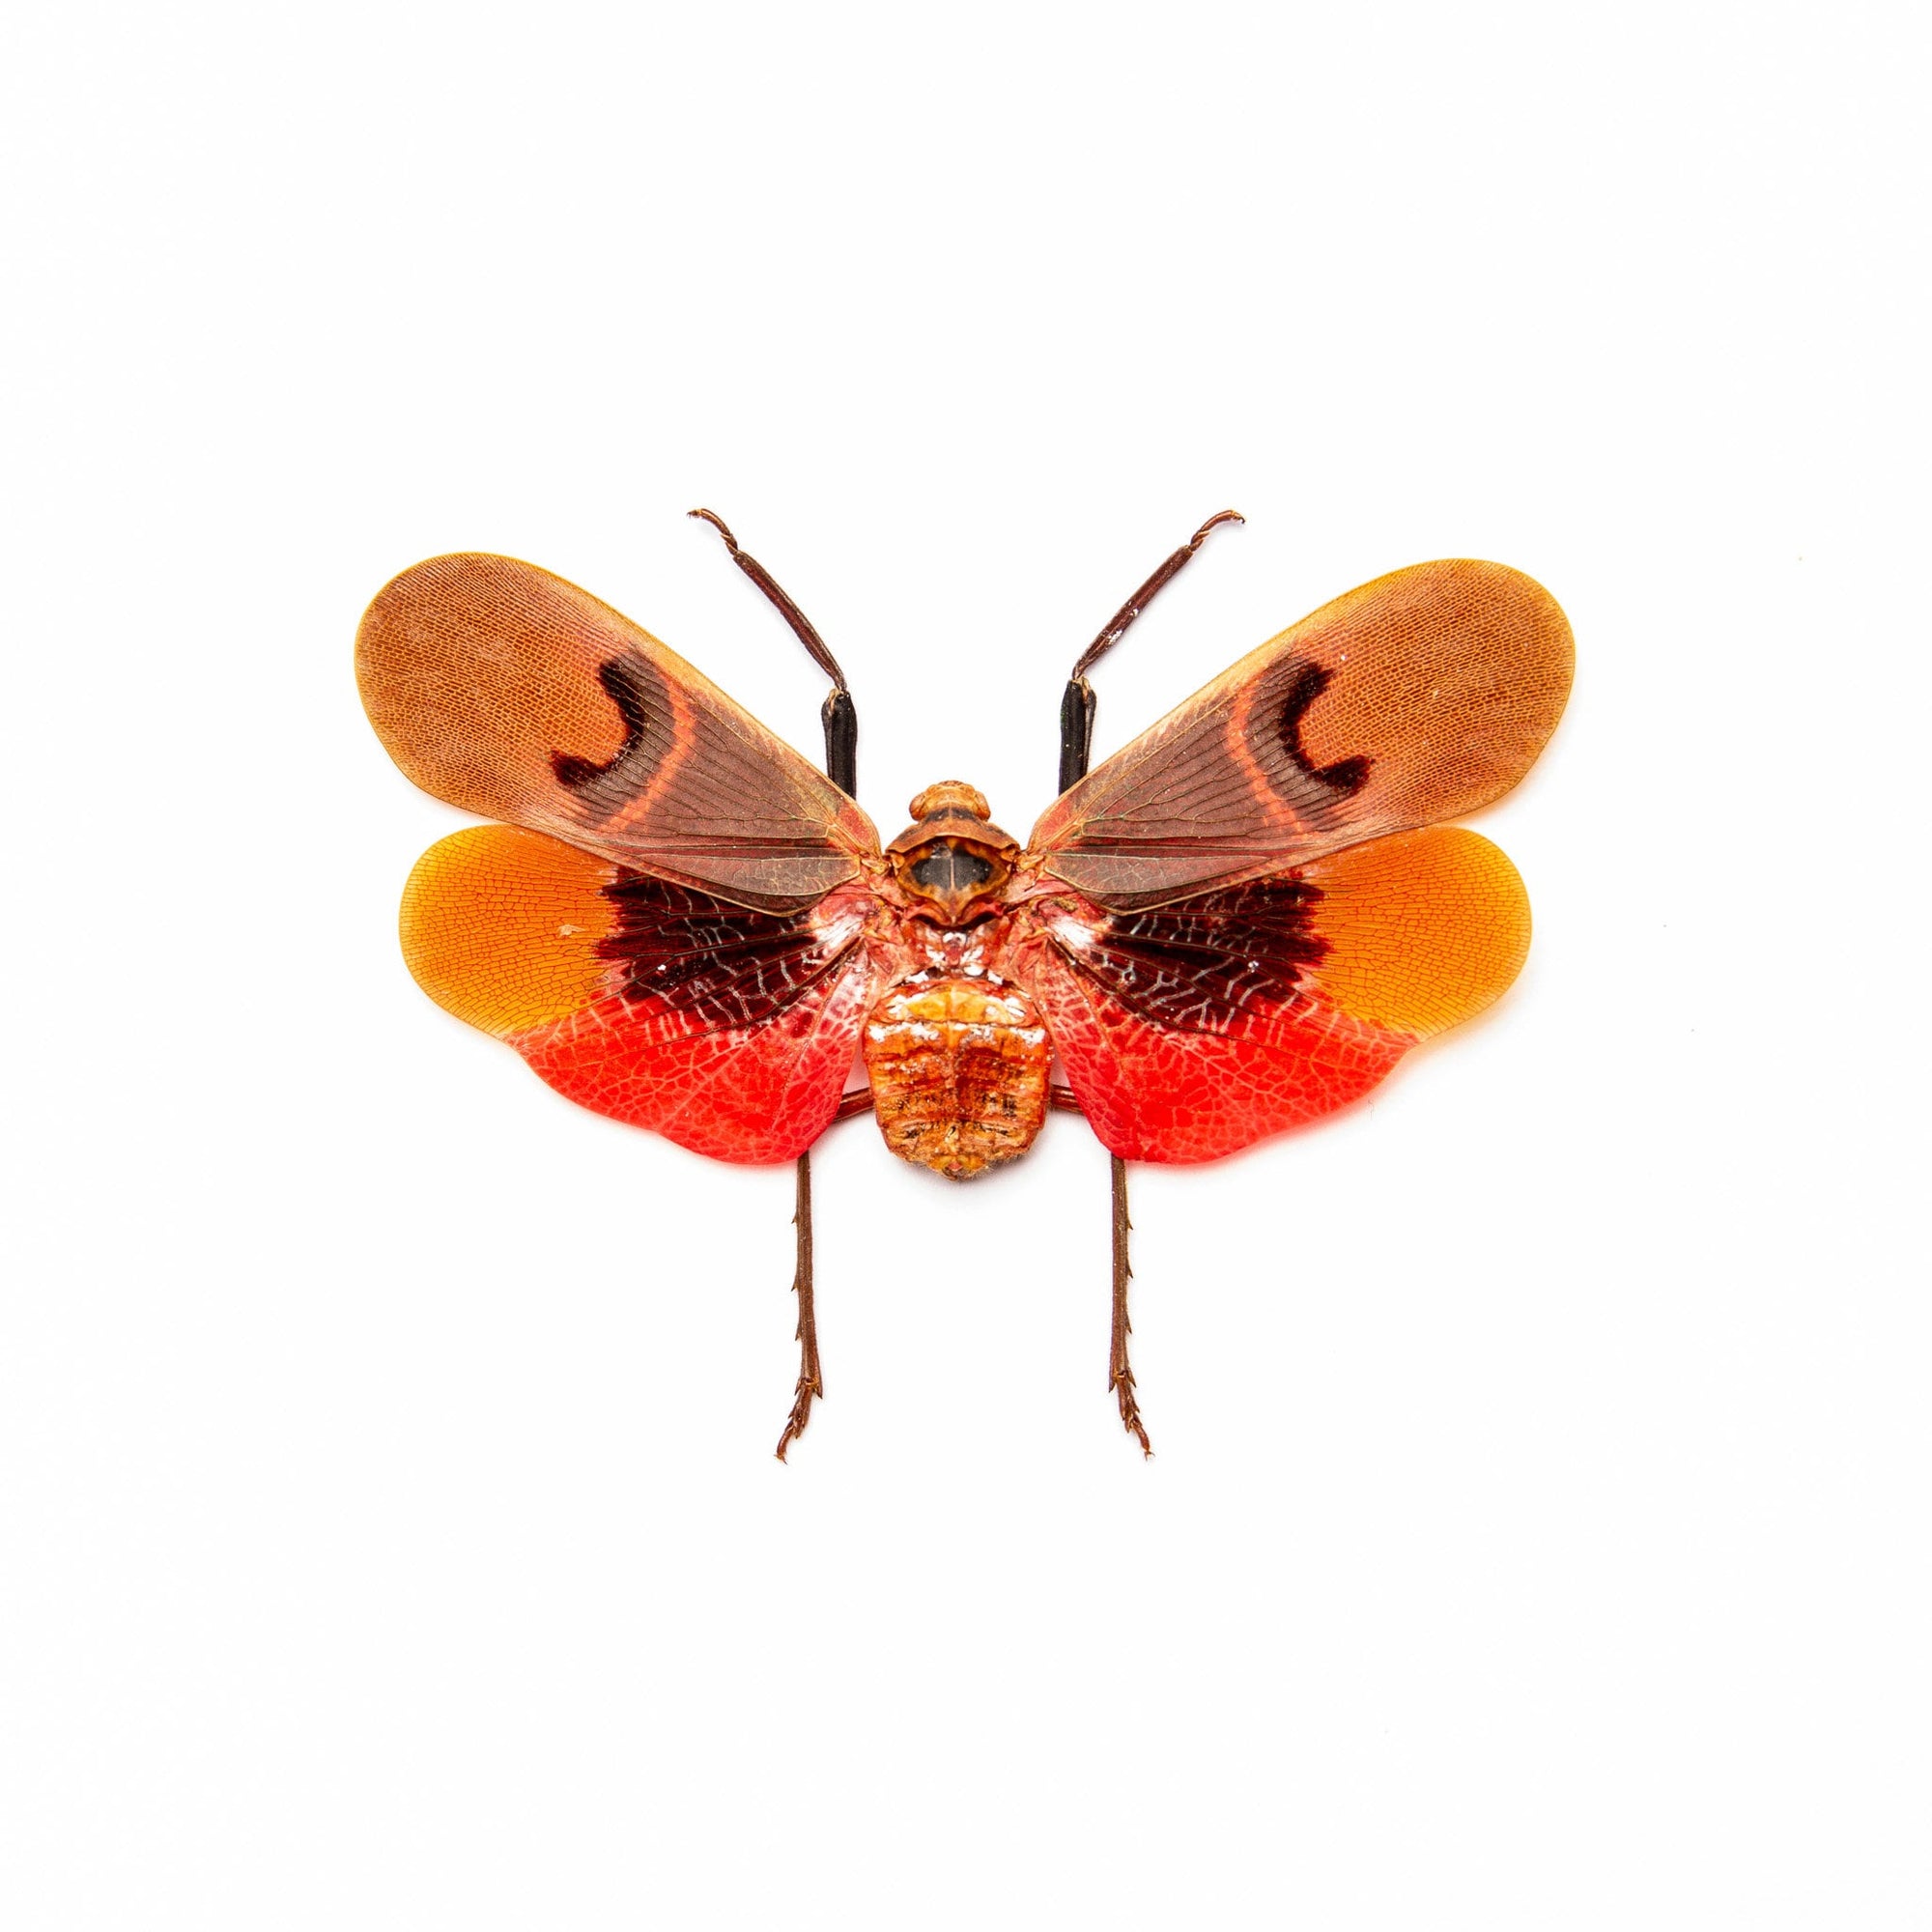 Two (2) Scamandra collaris (Spread) A1 Ethically Sourced Entomology Specimens